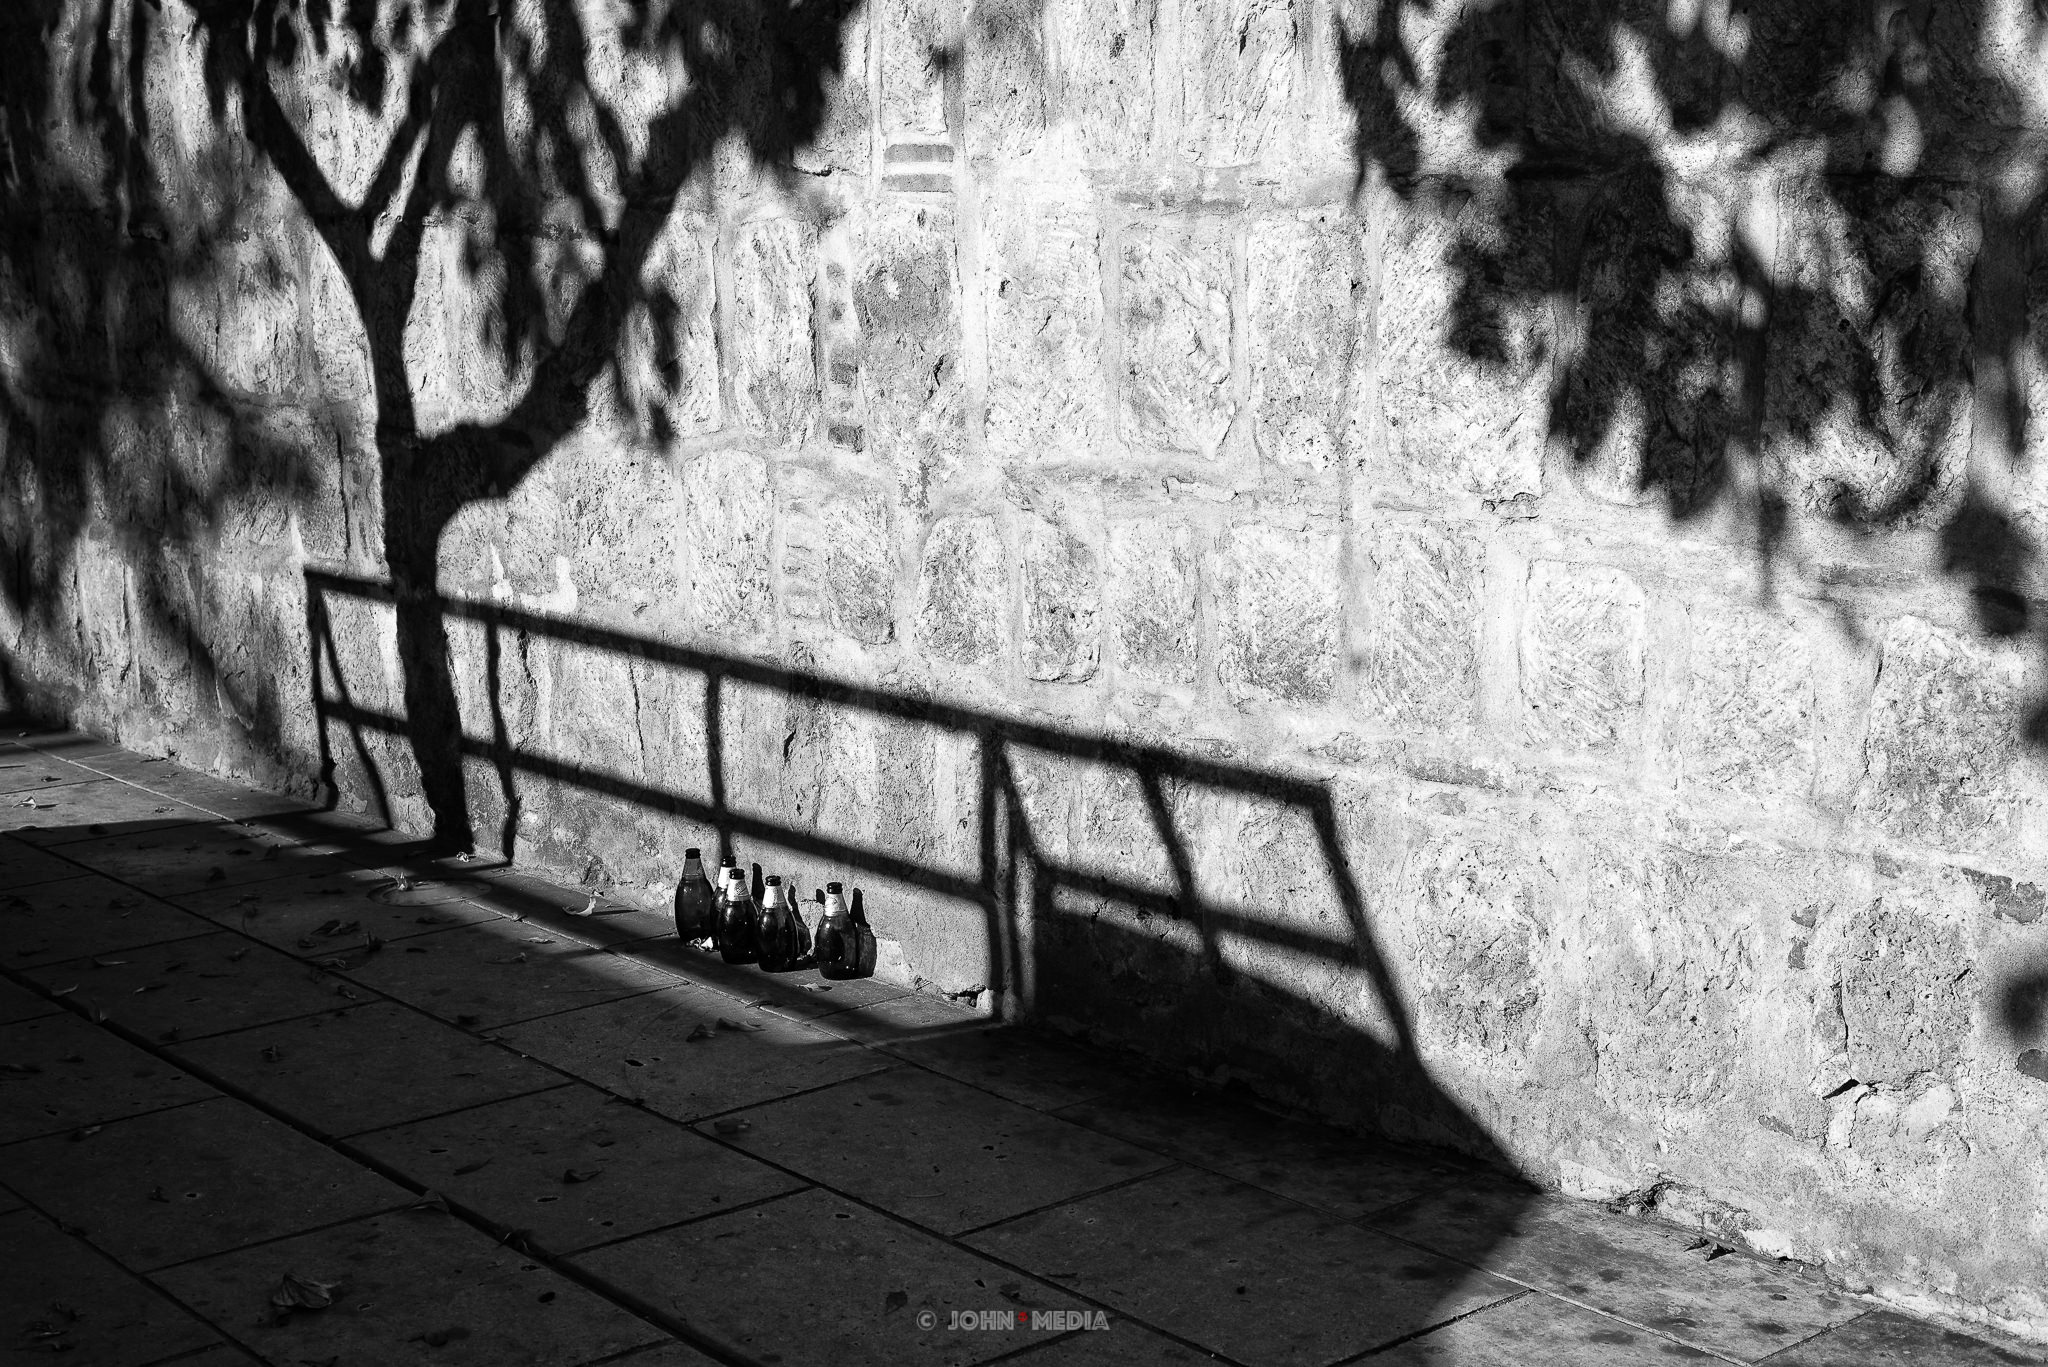 Oaxaca bottles and shade